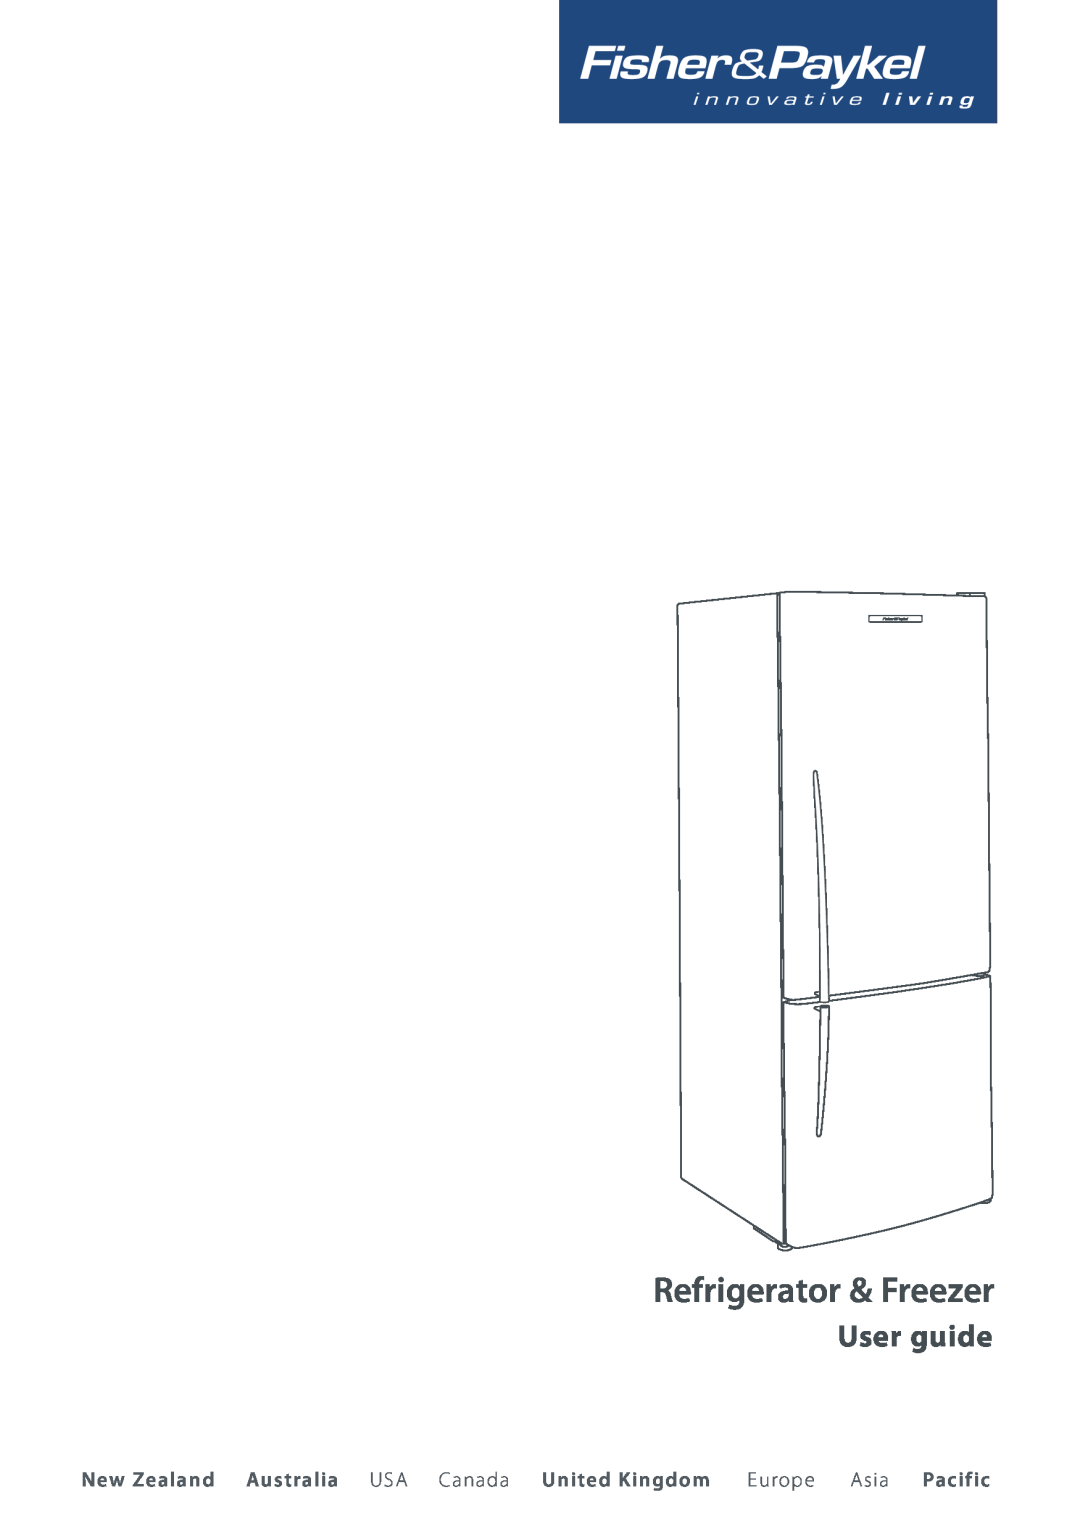 Fisher & Paykel Refrigerator & Freezer manual User guide 